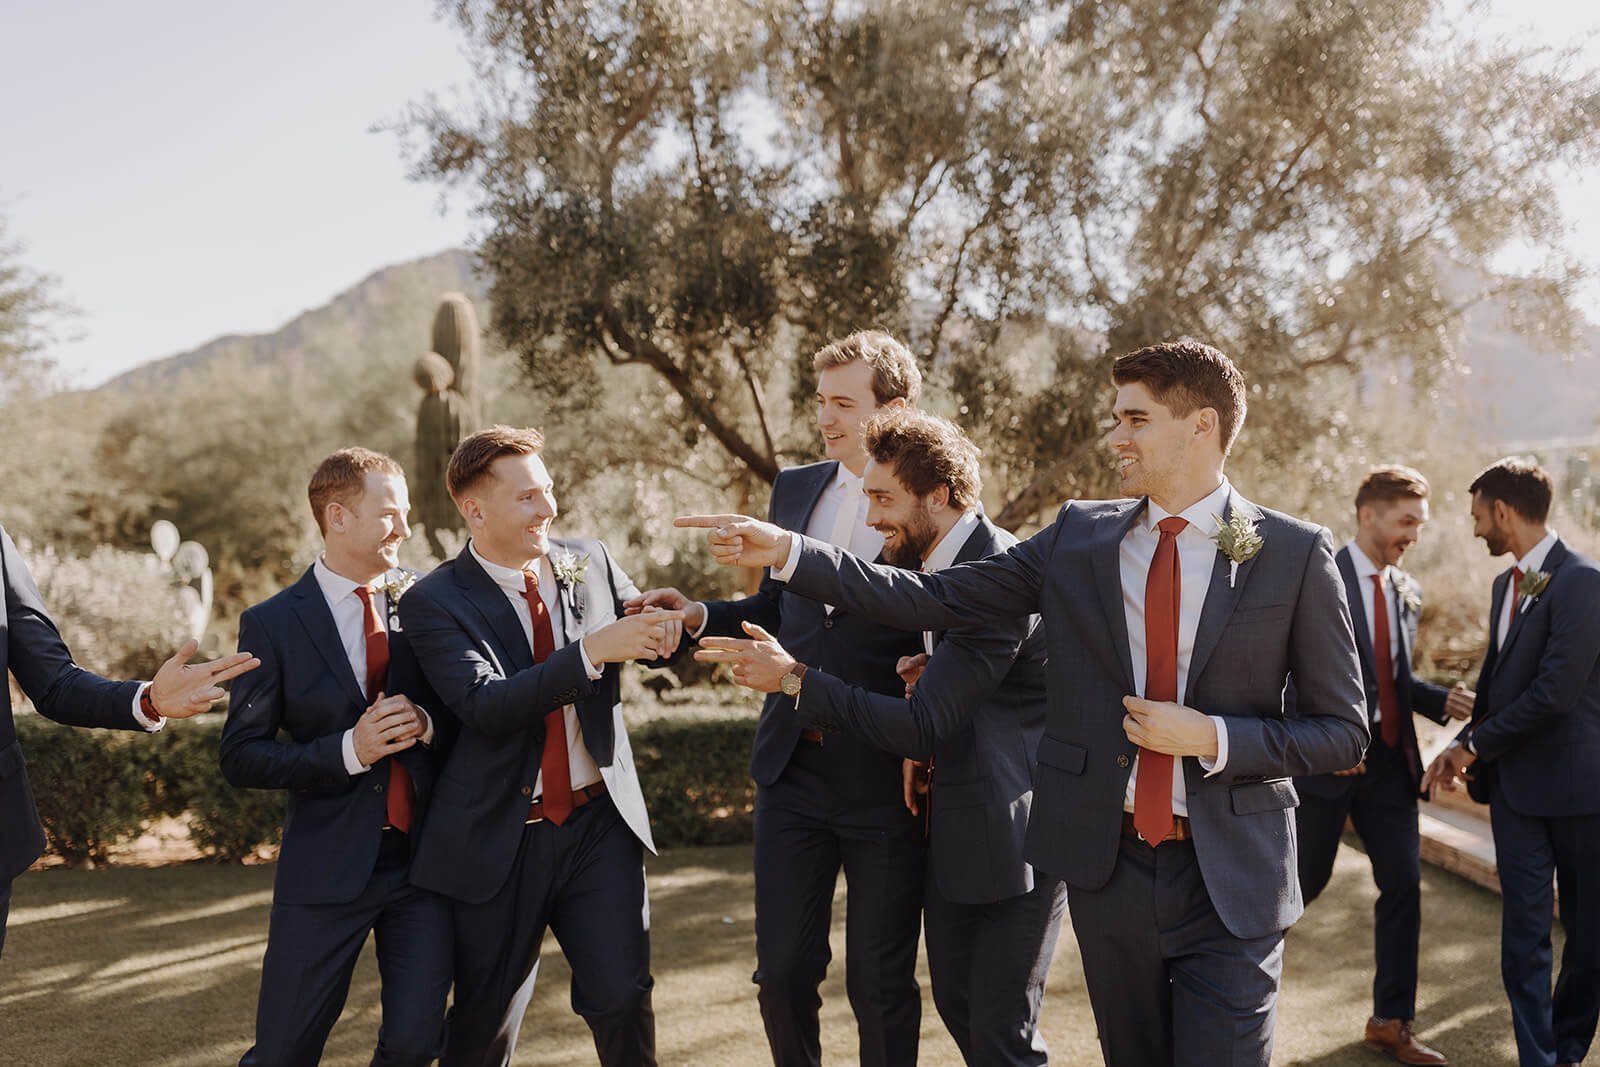 Desert wedding groom with groomsmen having fun